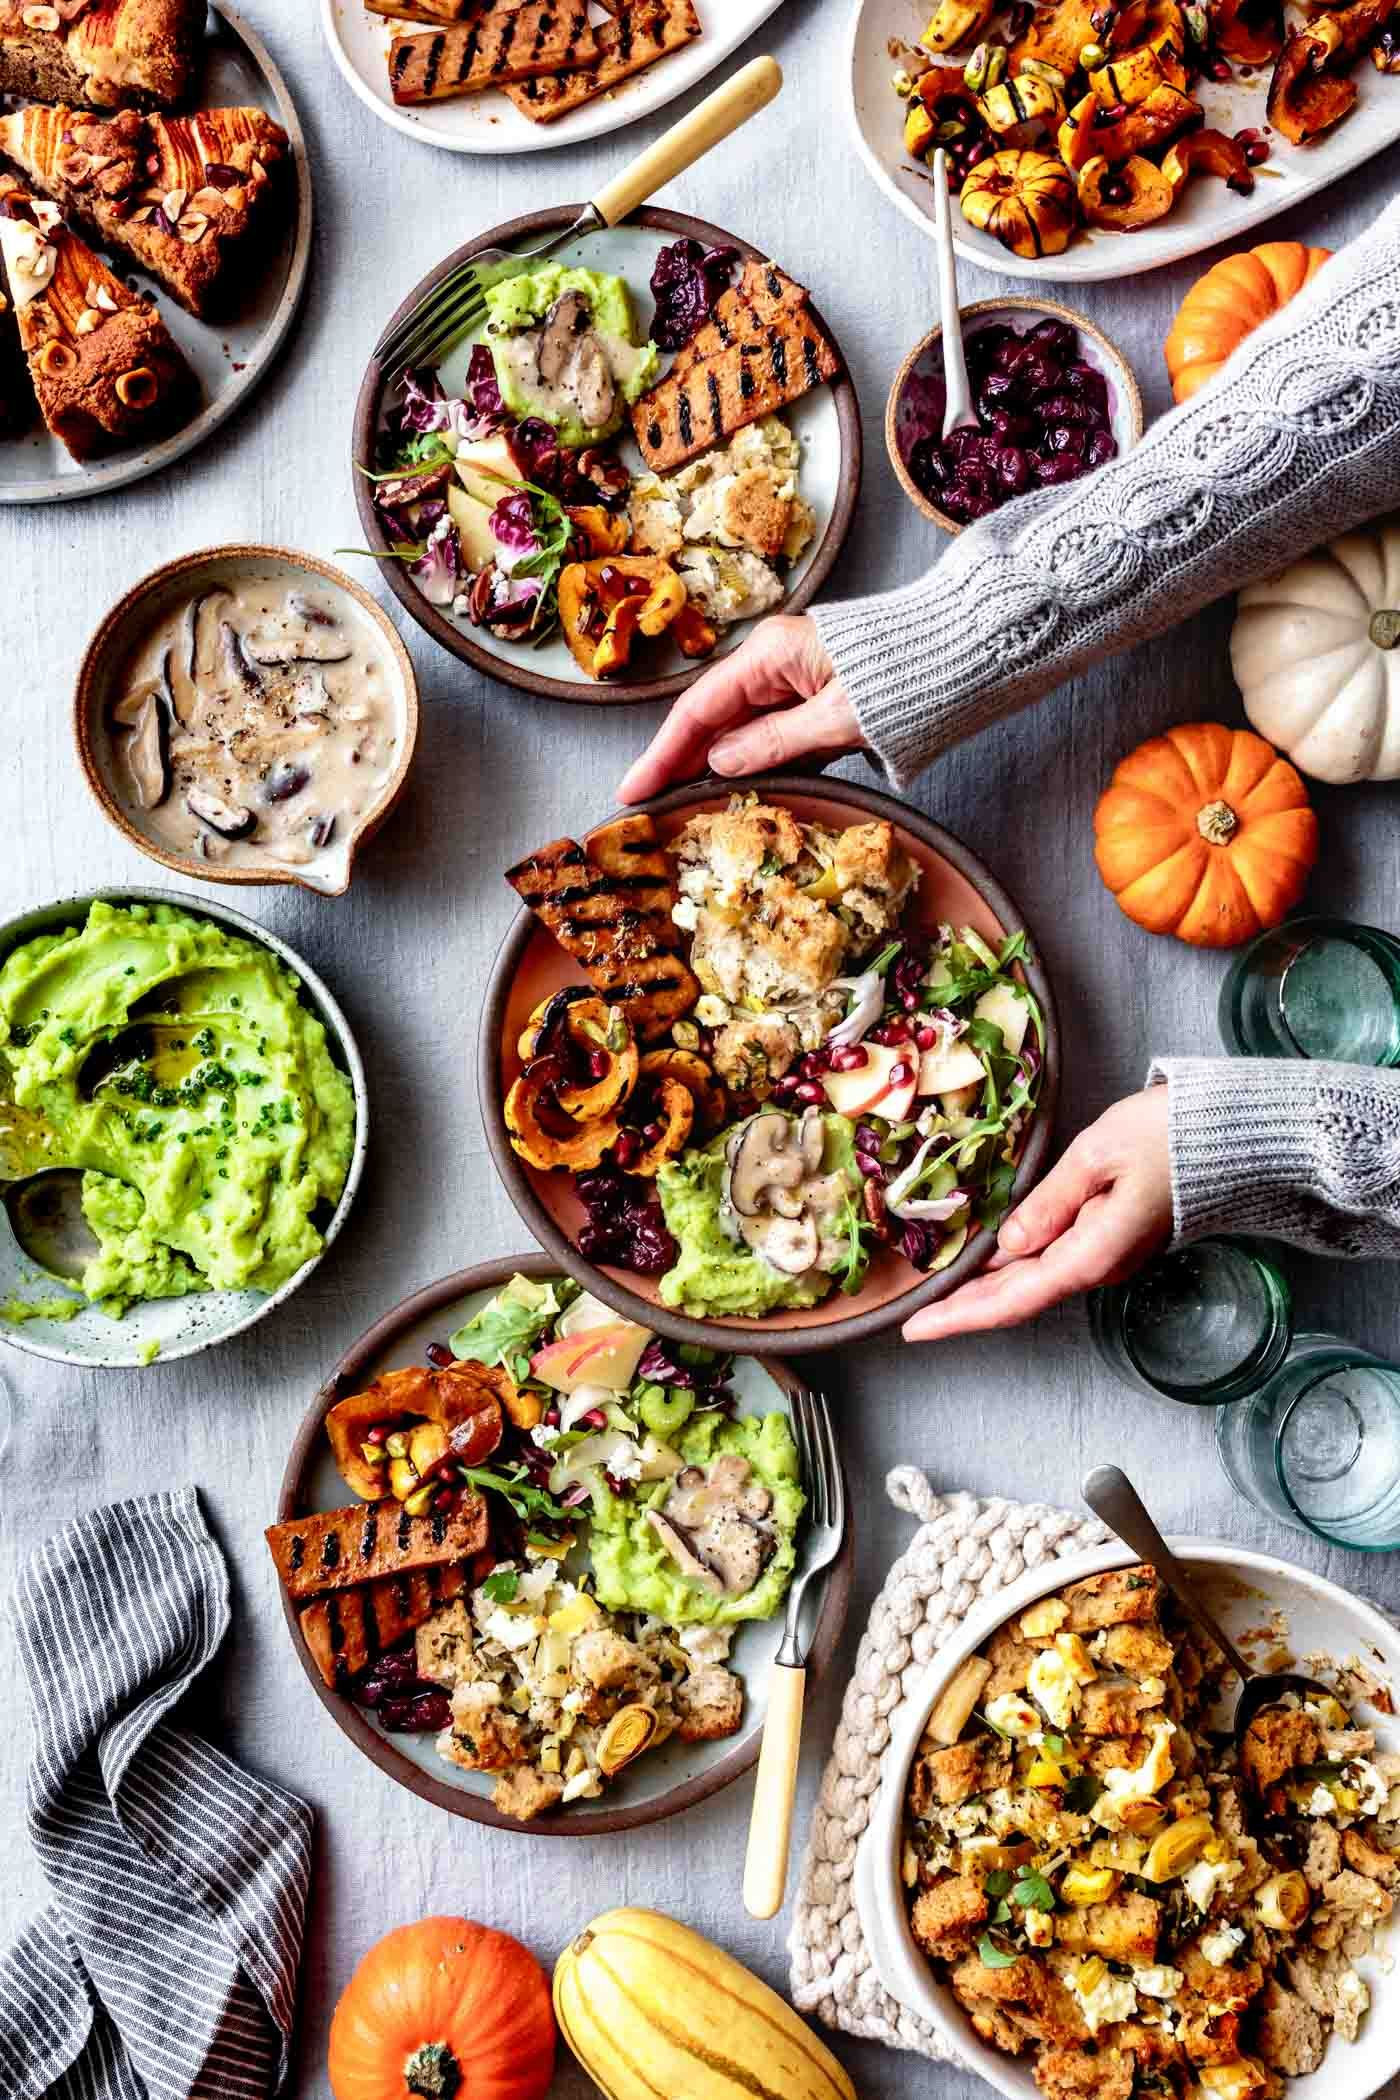 Gourmet Vegetarian Thanksgiving Recipes
 Ve arian Gluten Free Thanksgiving Recipes from